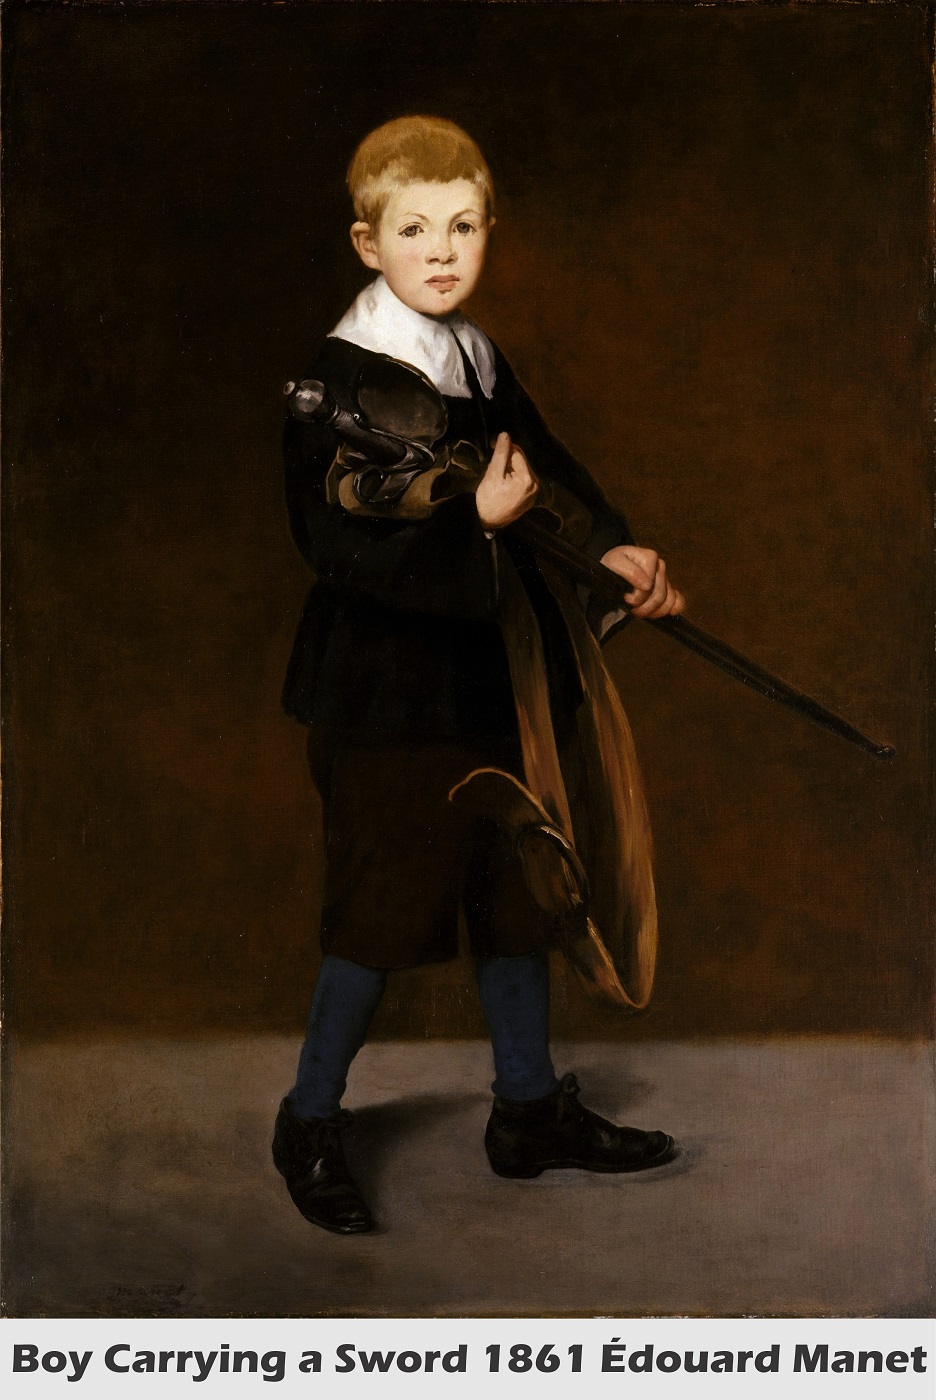 Boy Carrying a Sword by Édouard Manet